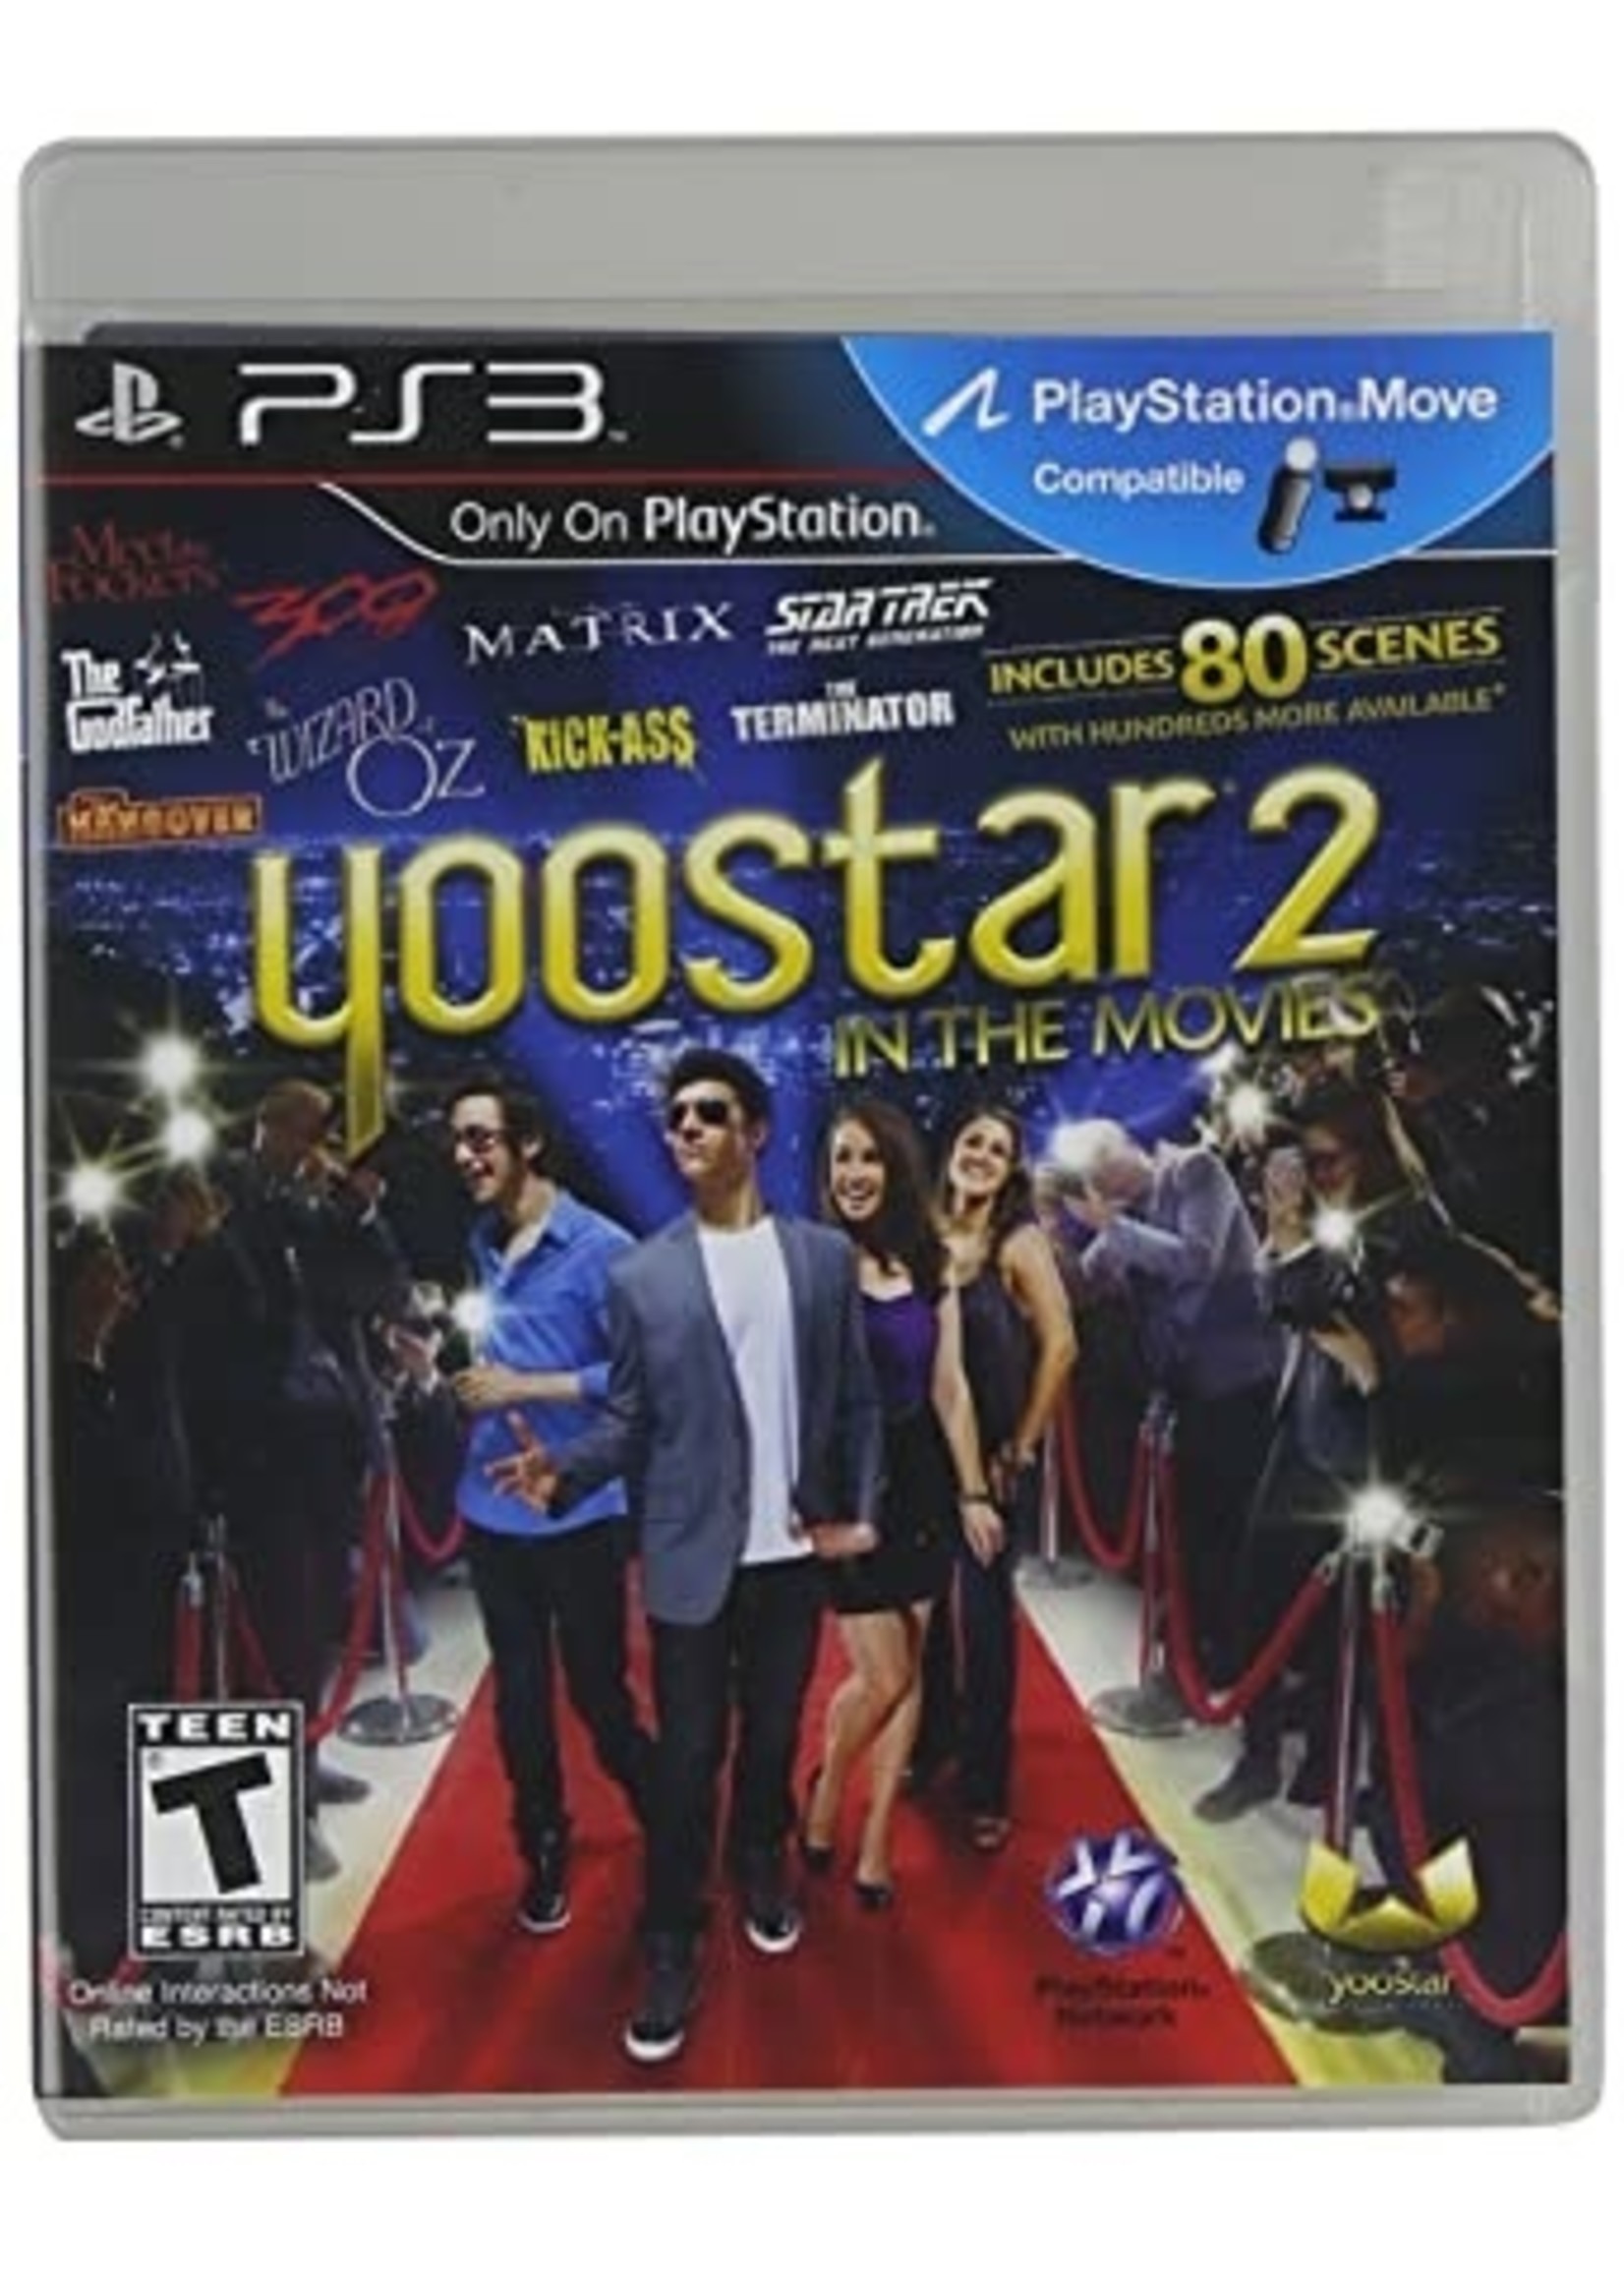 Sony Playstation 3 (PS3) YooStar 2